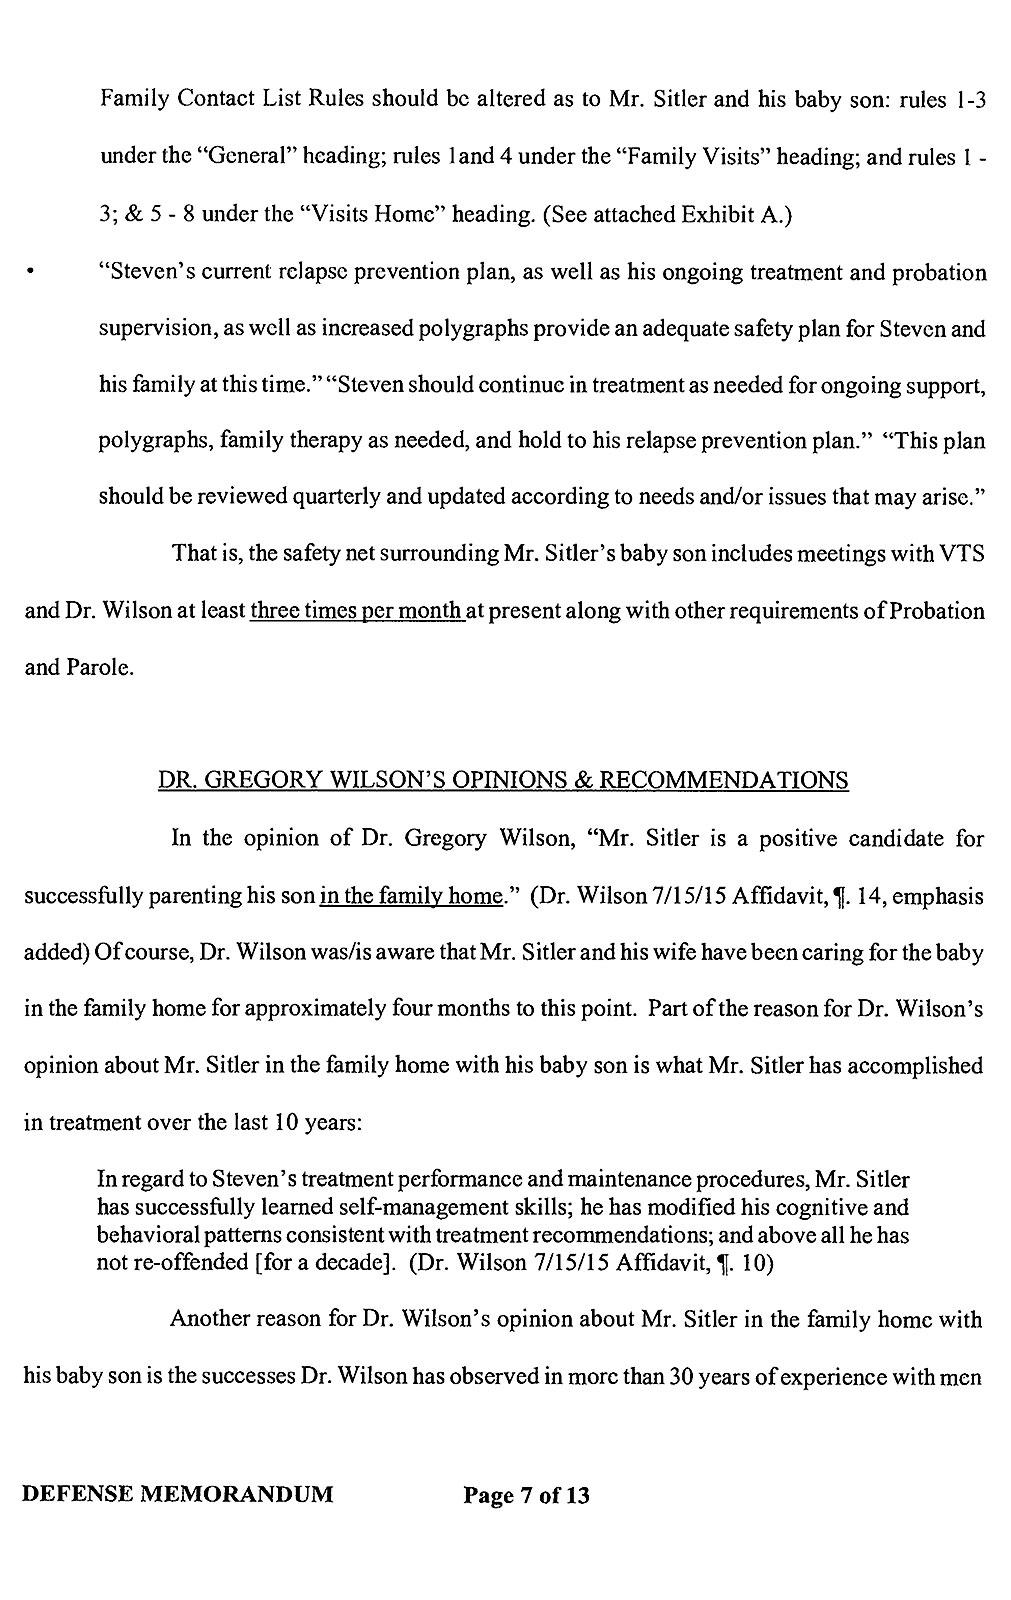 Steven Sitler Defense Memorandum, page 7